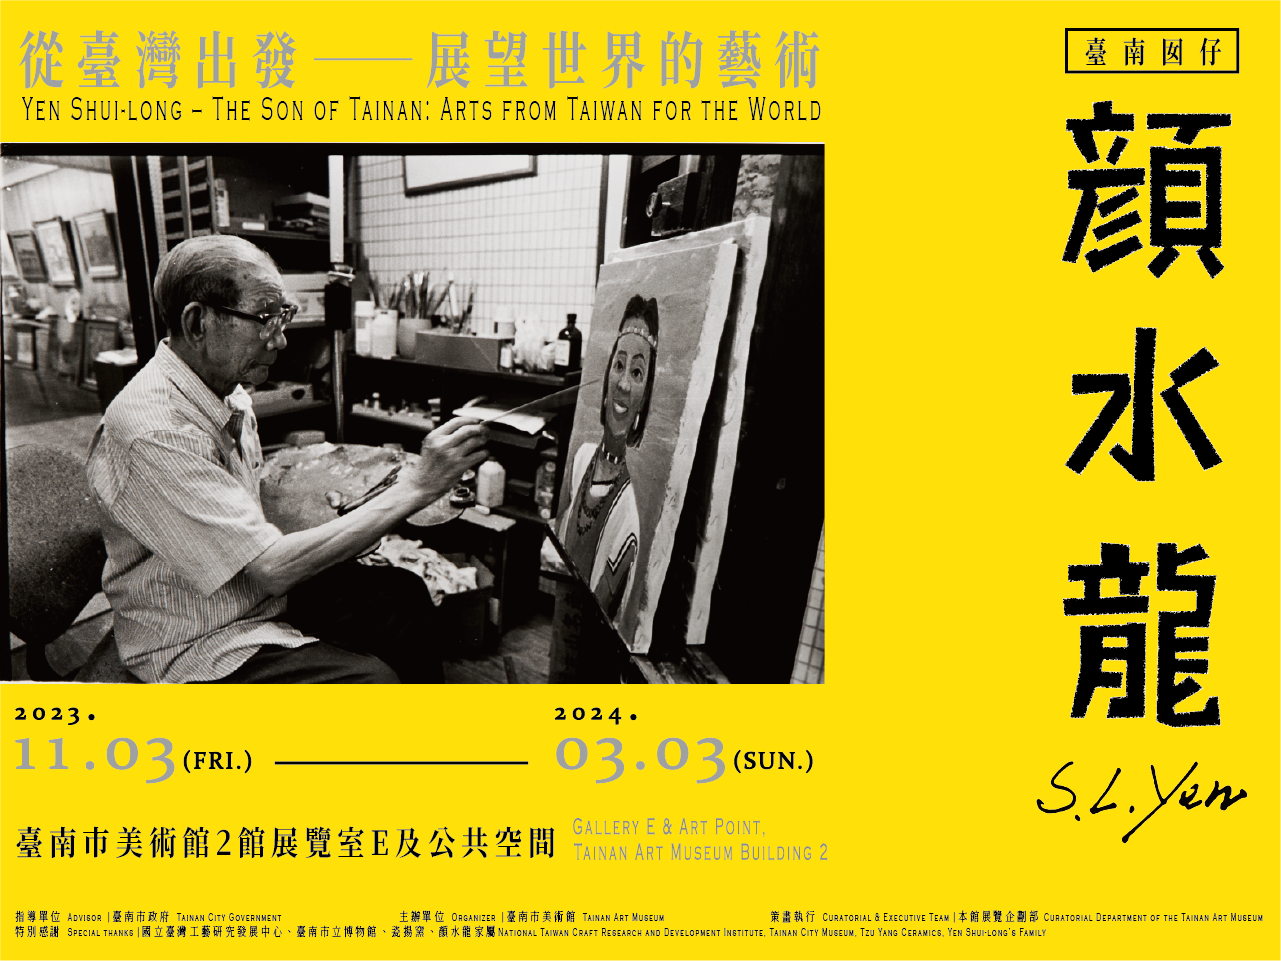 南應大美術系創系主任臺南囡仔顏水龍-台南美術館展覽──從臺灣出發展望世界的藝術 Yen Shui-long – The son of Tainan: Arts from Taiwan for the World